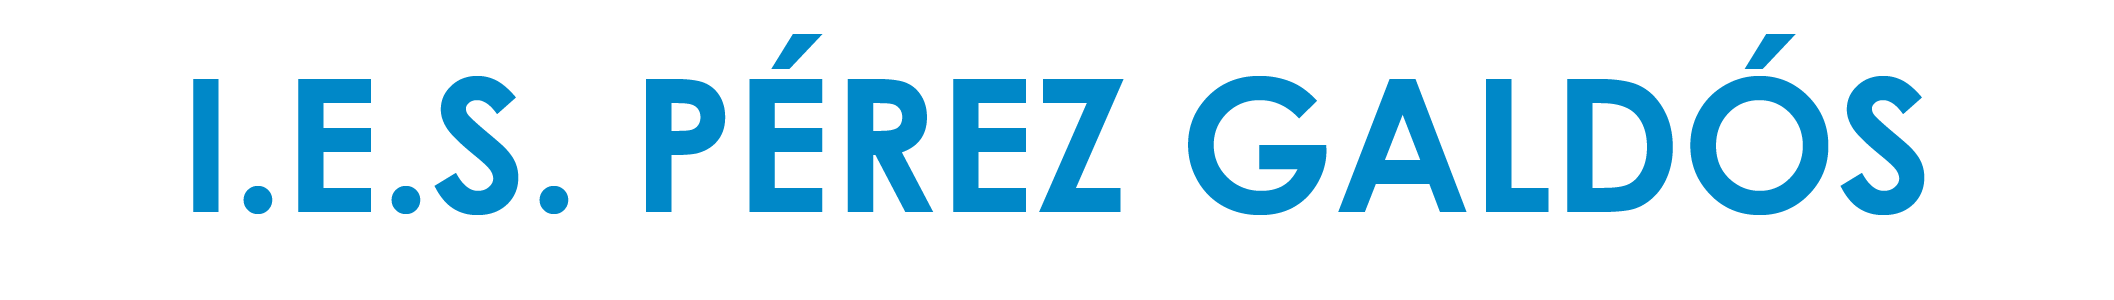 IES Perez Galdos logo